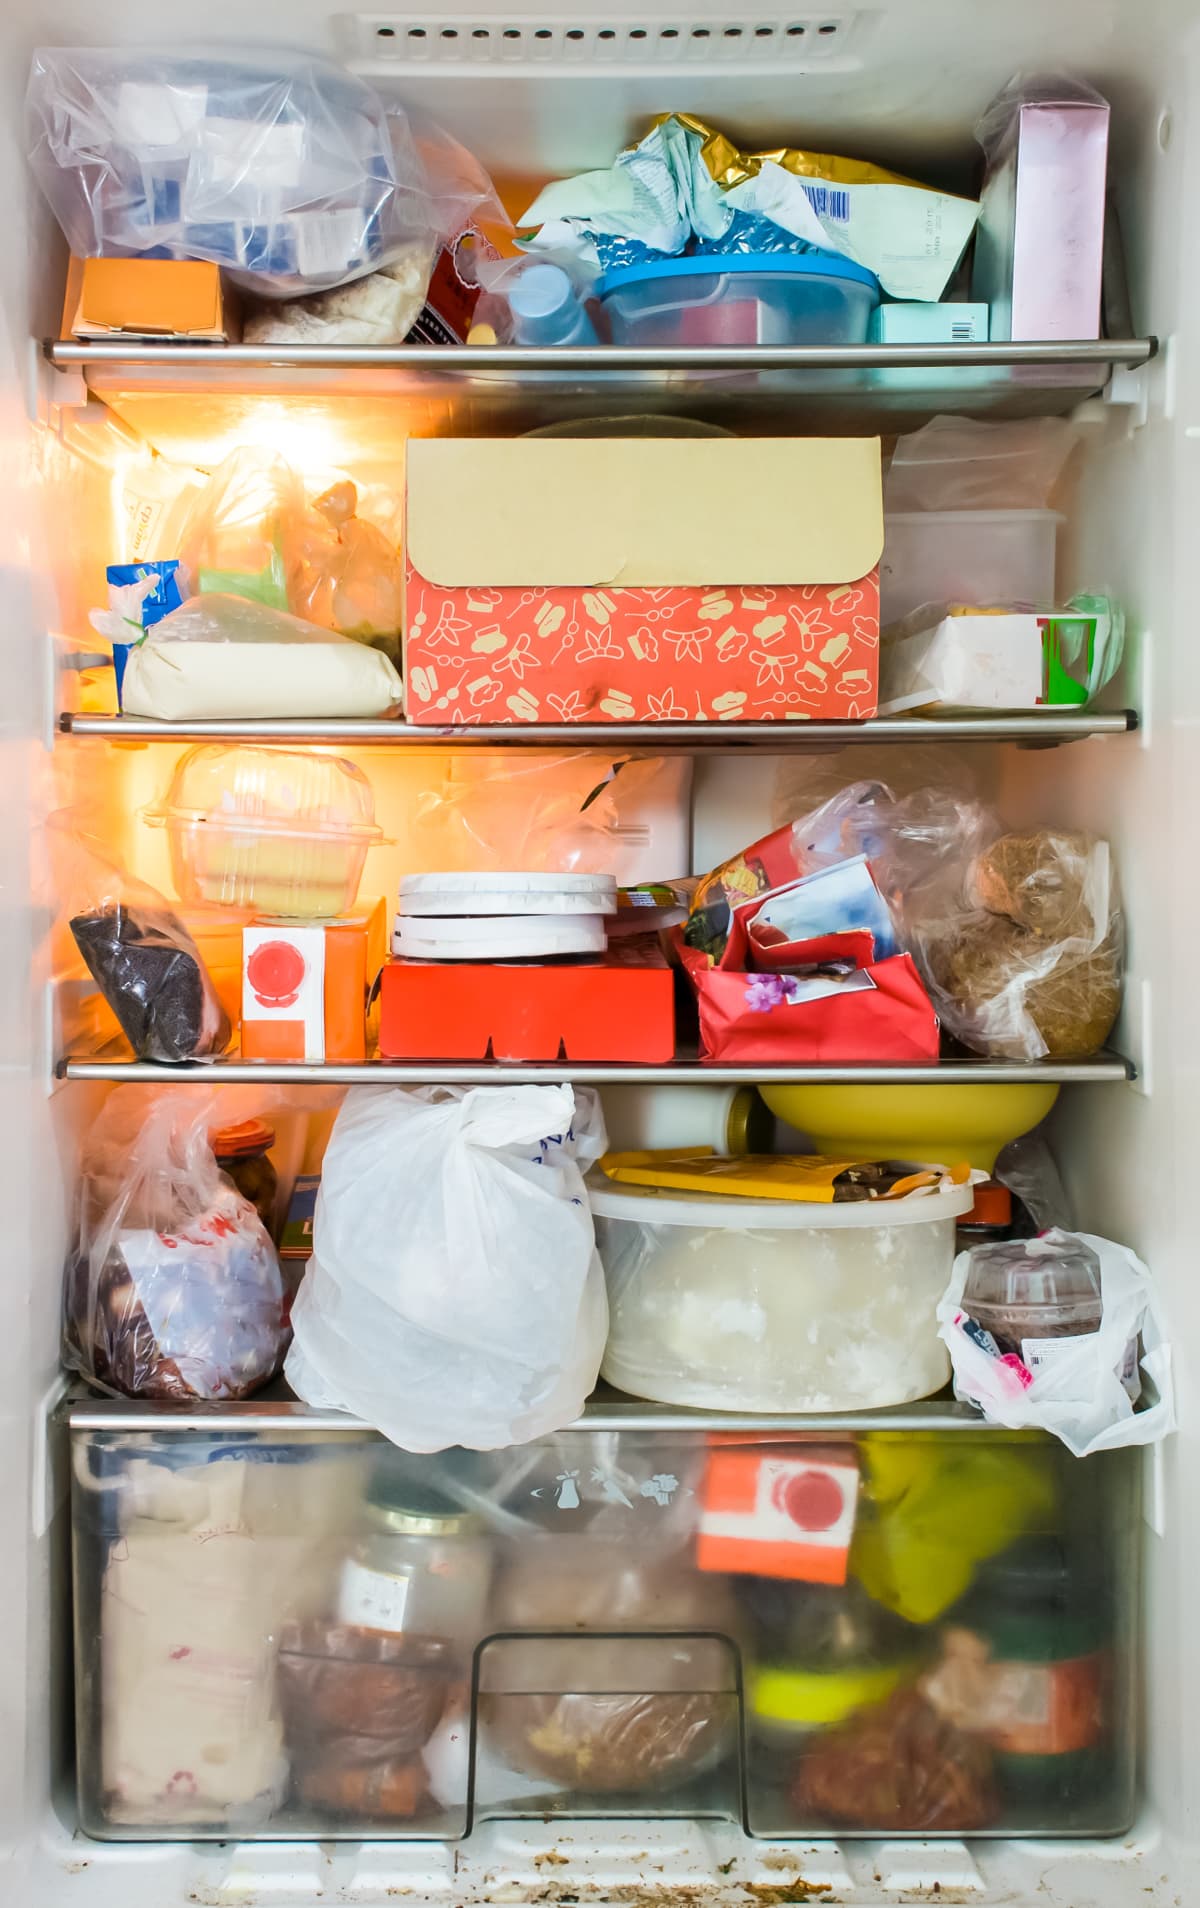 vegetables and jars inside the refrigerator